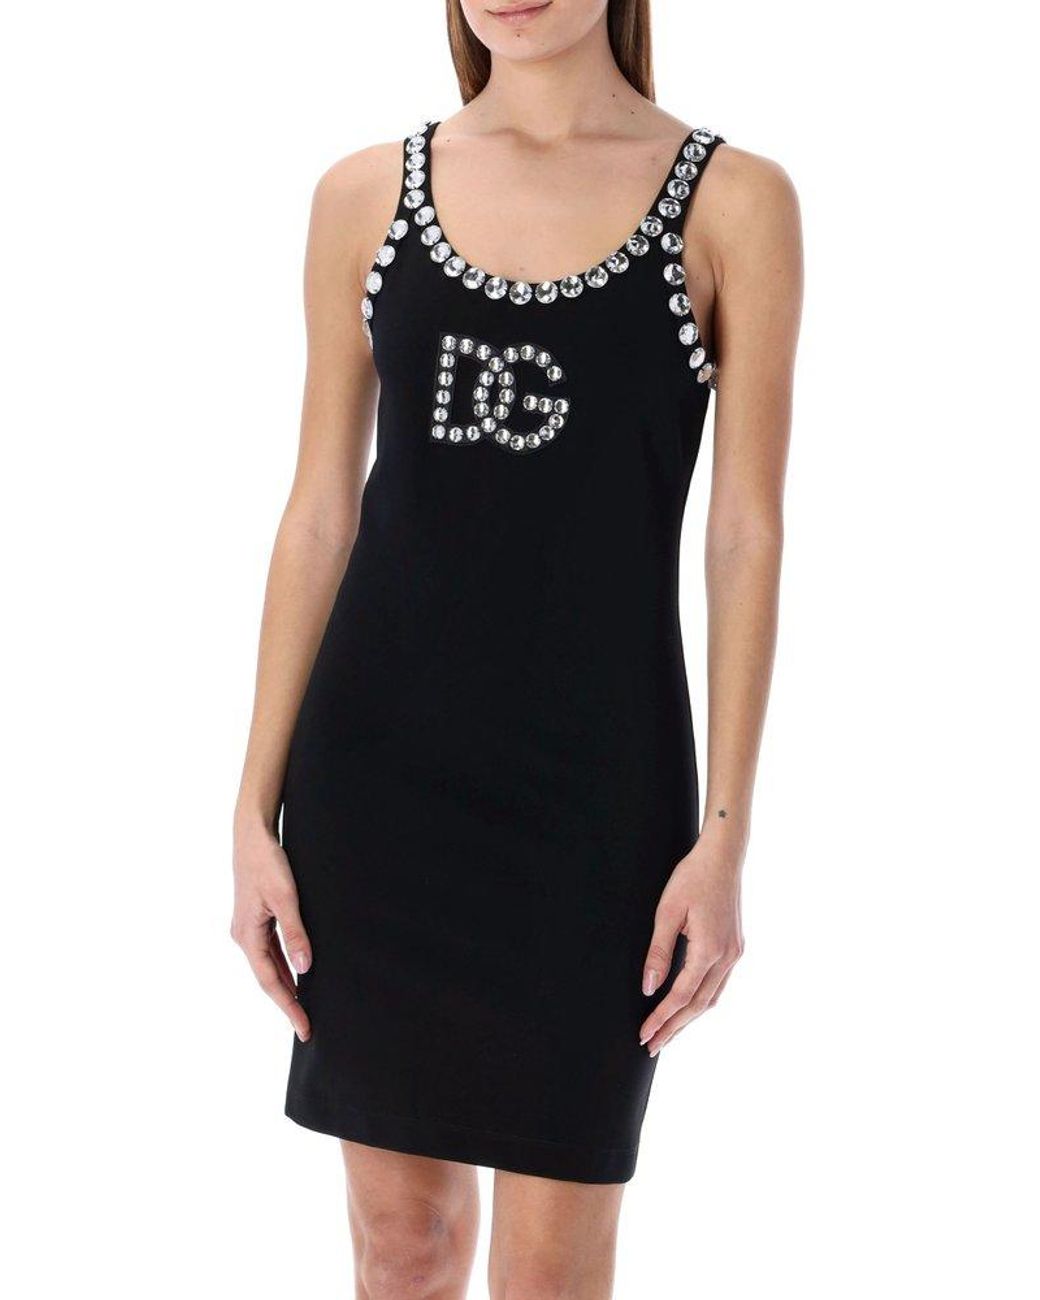 21+ Dolce And Gabbana Black Dress